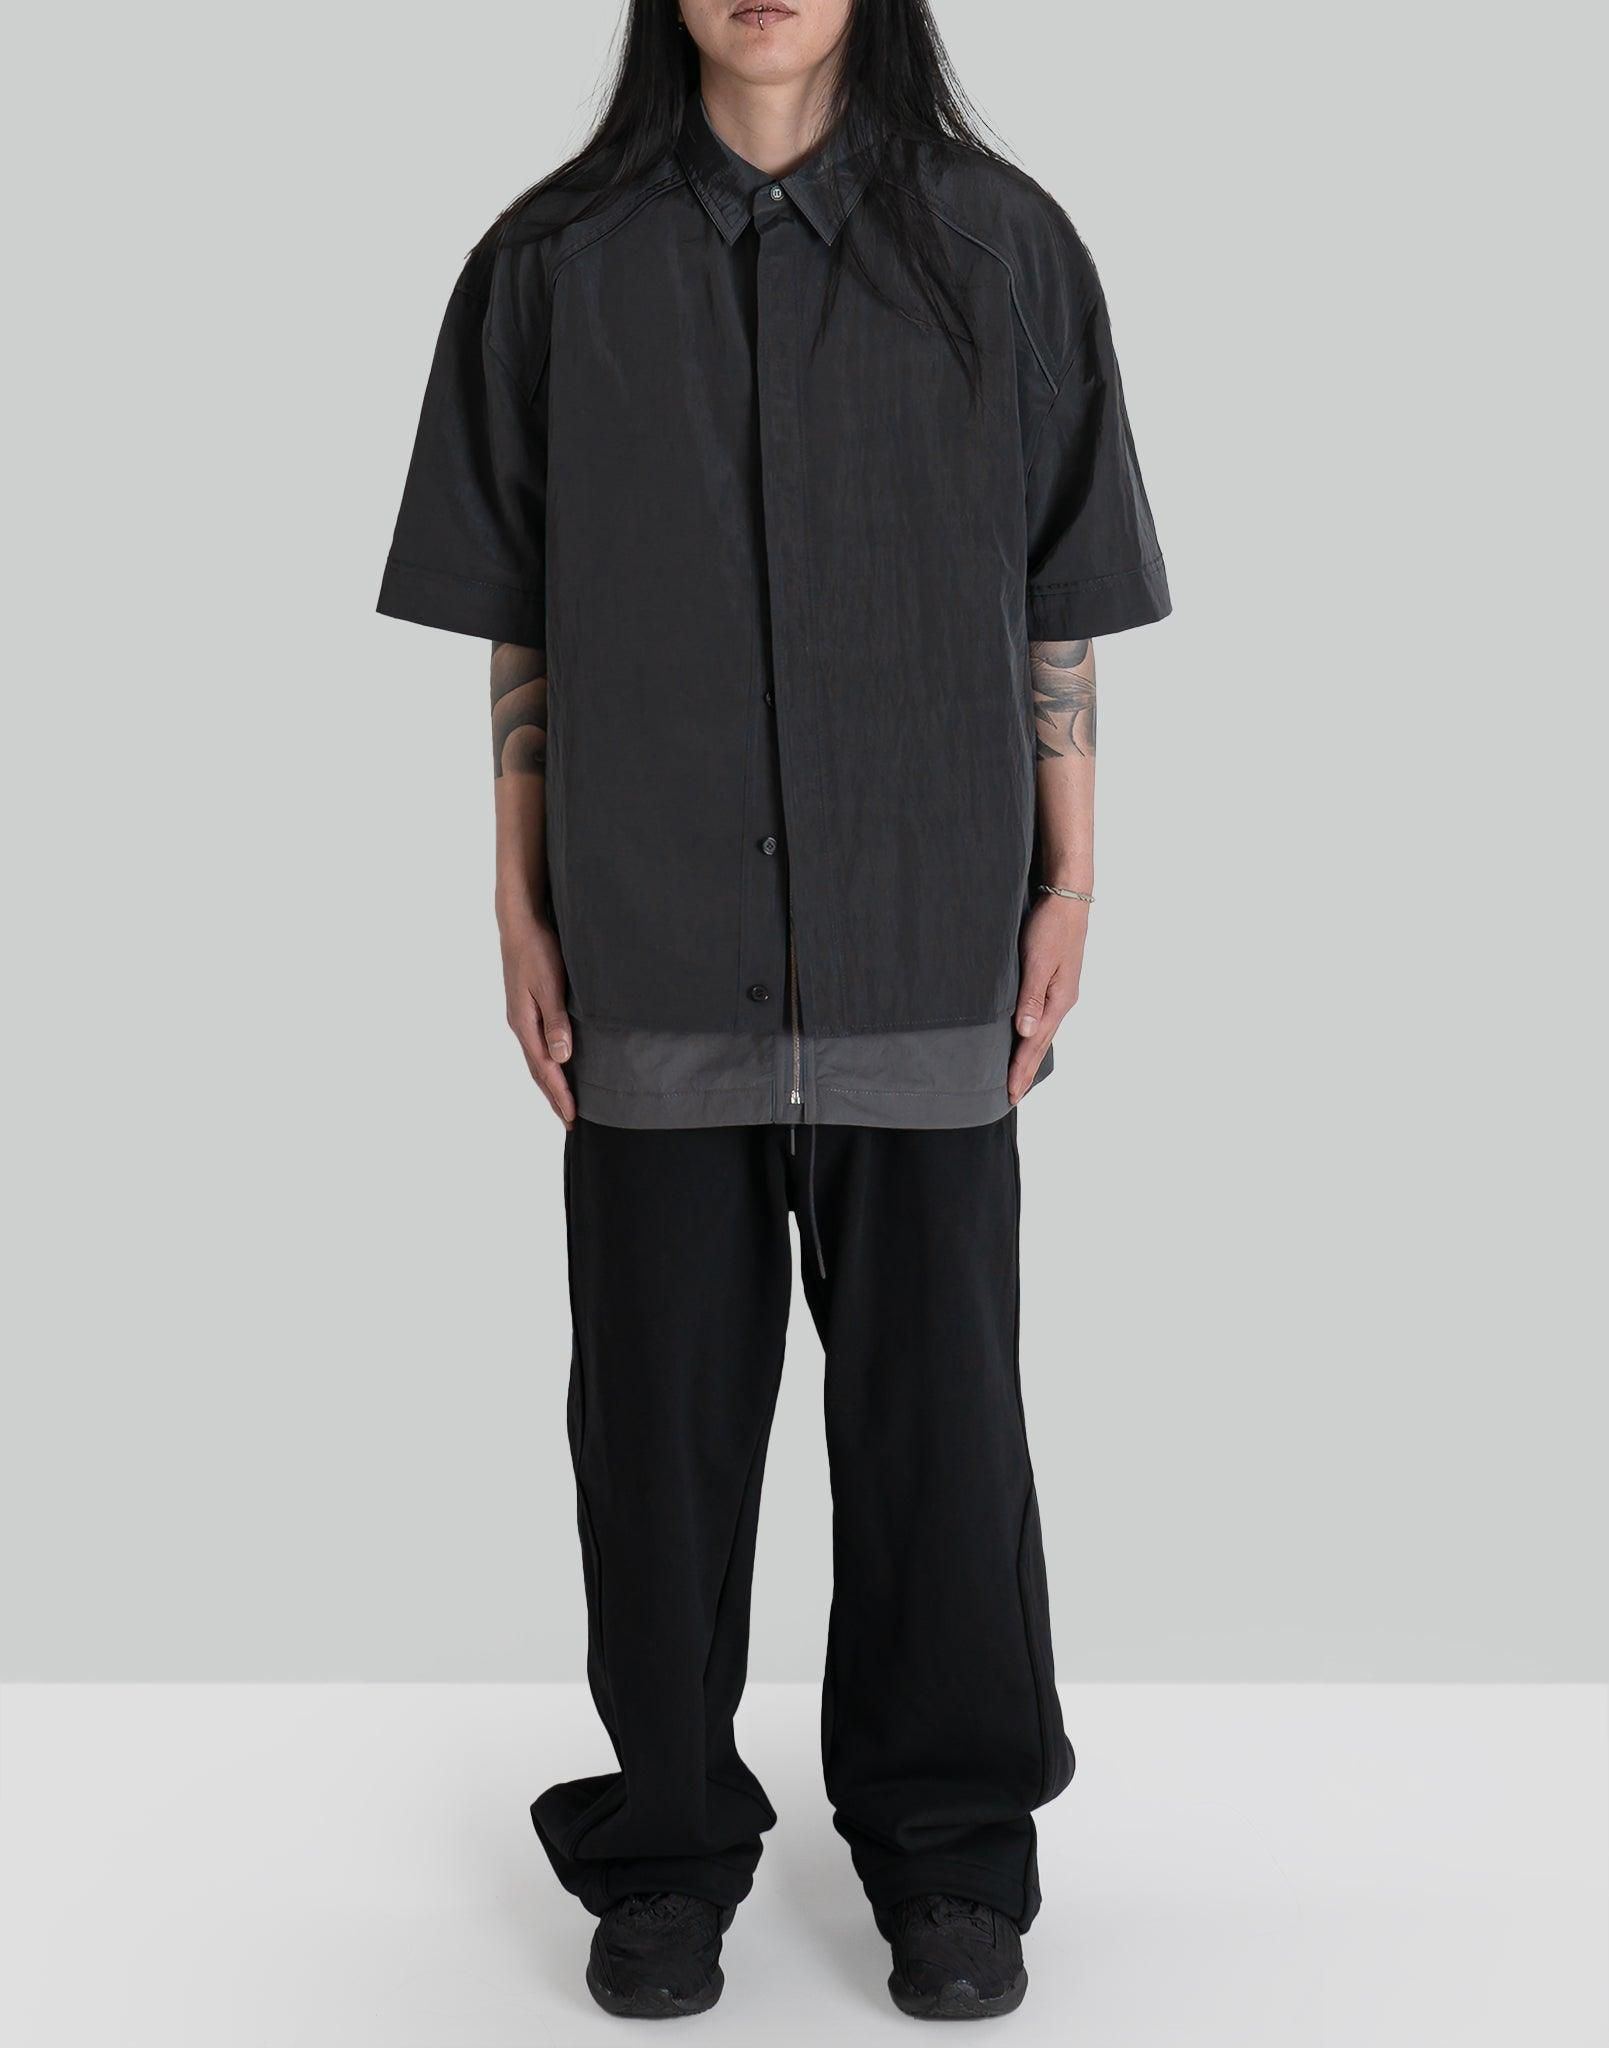 Juun.J Double Layered Short Sleeve Zip-Up Shirts - 082plus